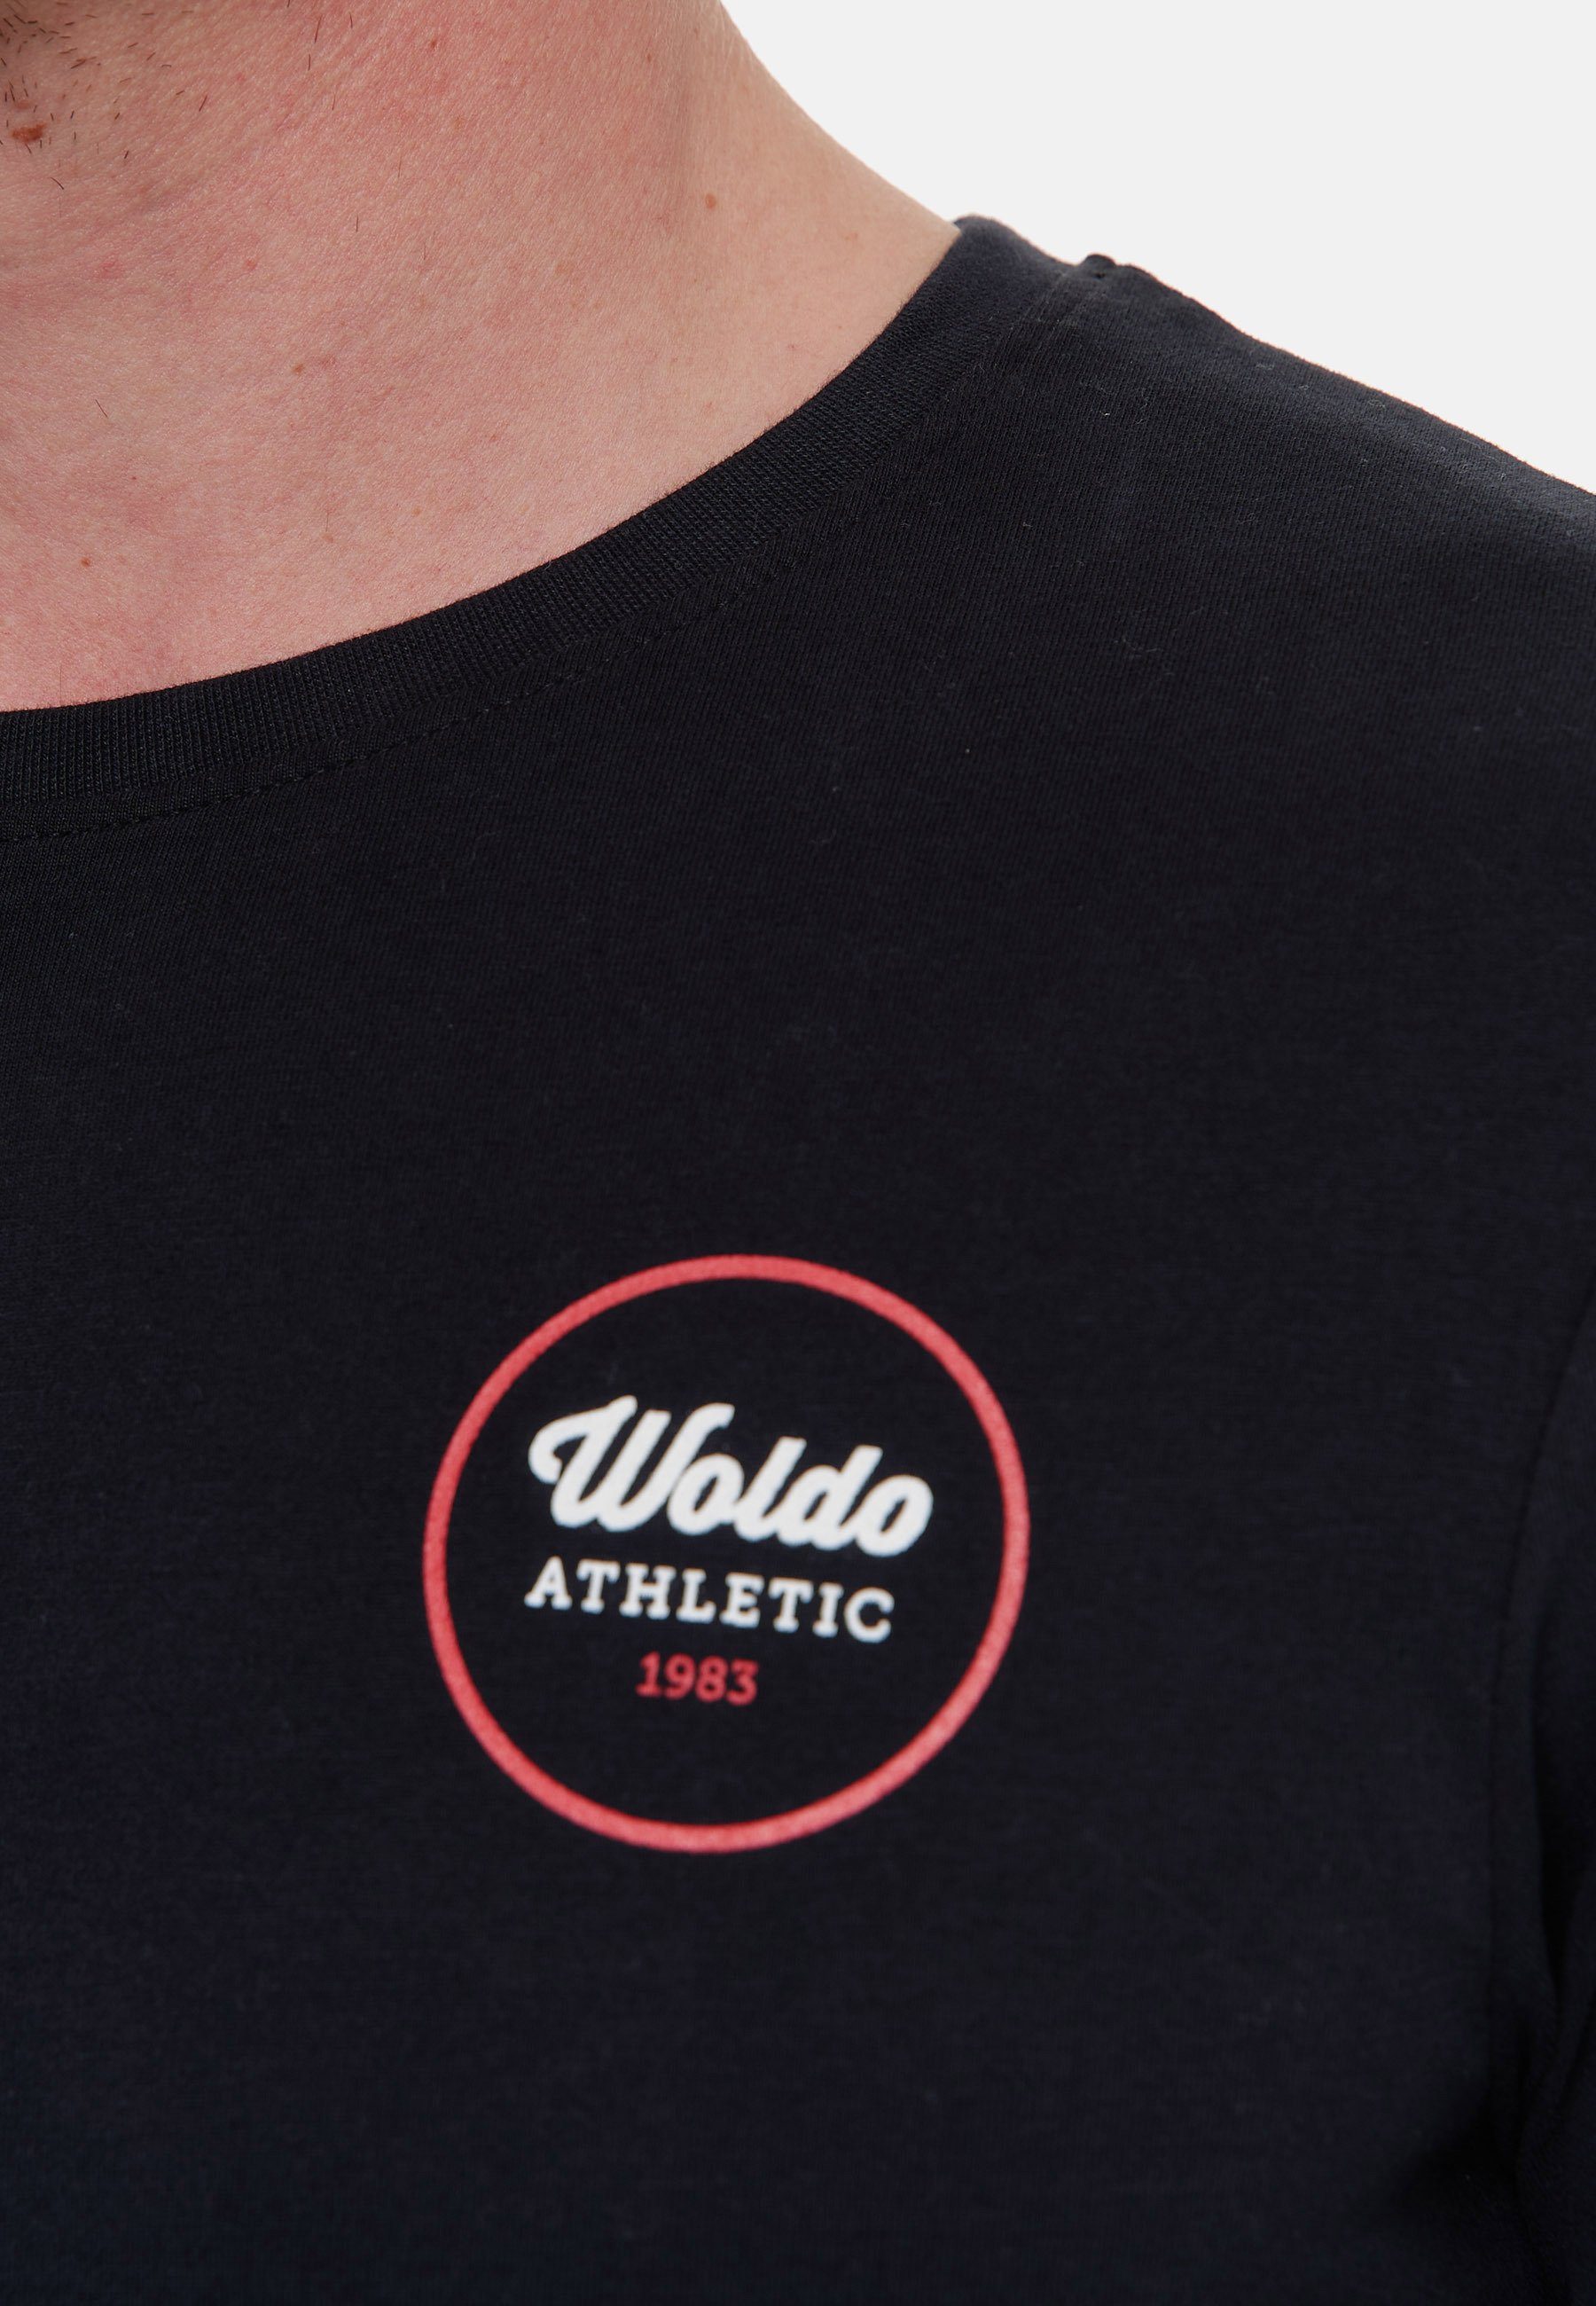 Woldo Athletic Print schwarz-rot Runder T-Shirt T-Shirt